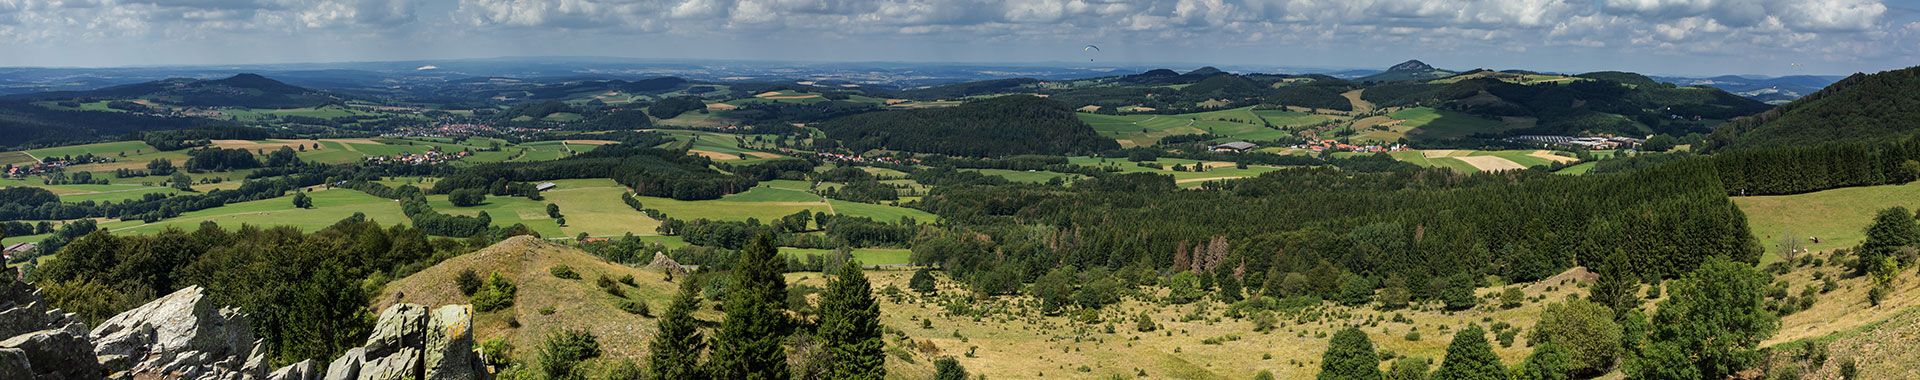 Panorama der Landschaft in Hessen